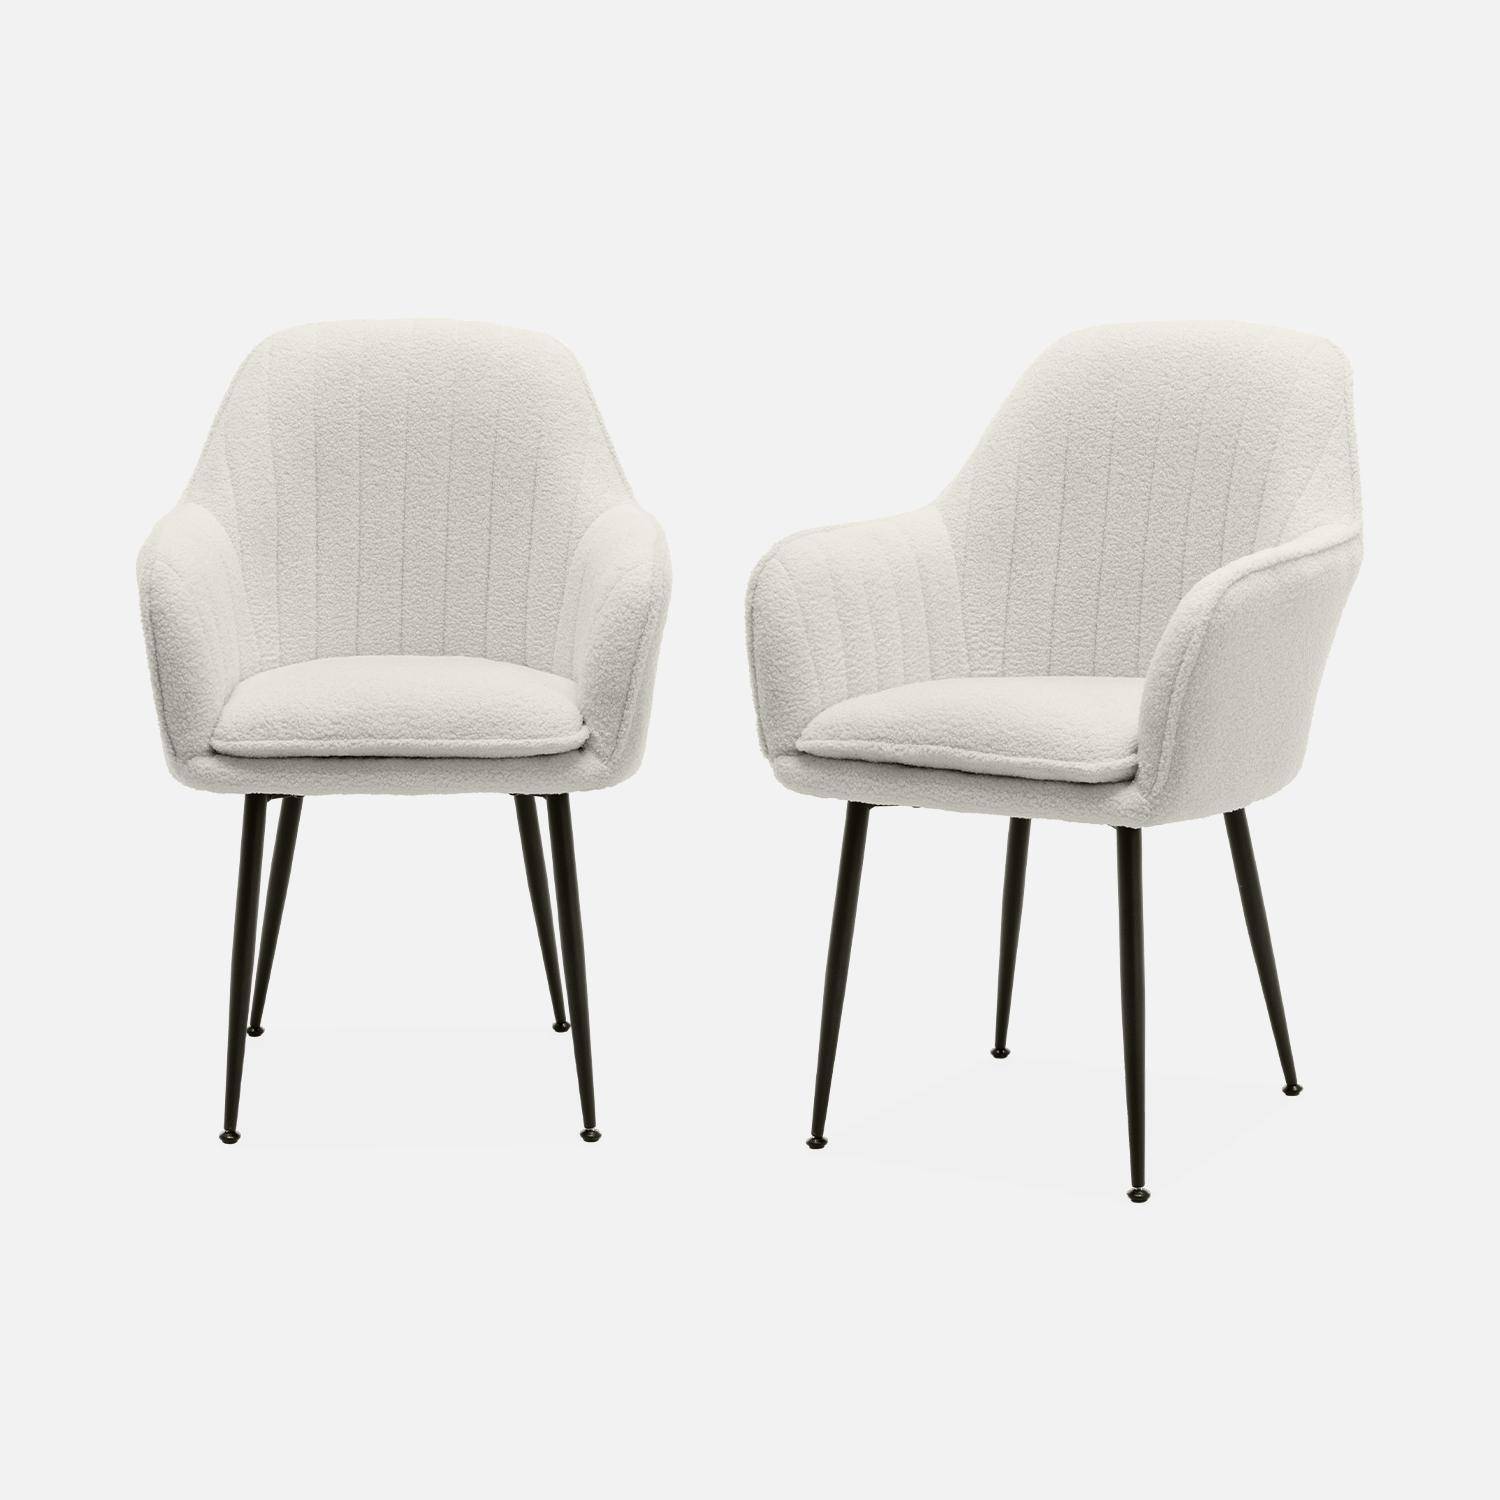 Set of 2 Boucle armchair with metal legs, 58x58x85cm - Shella Boucle - White,sweeek,Photo2